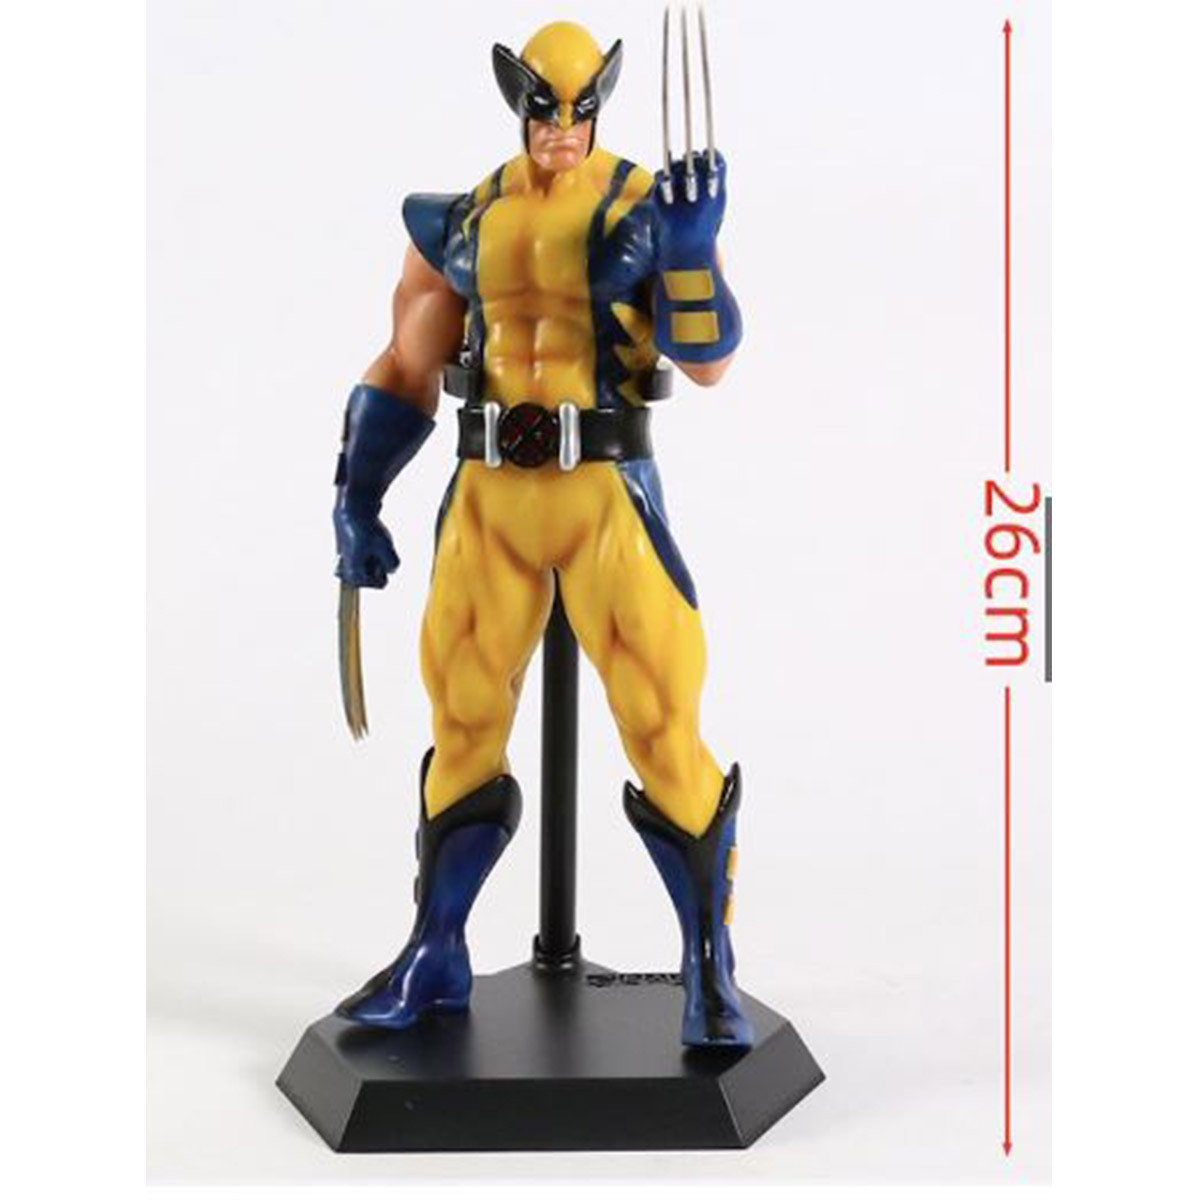 اکشن فیگور مدل Wolverine Logan